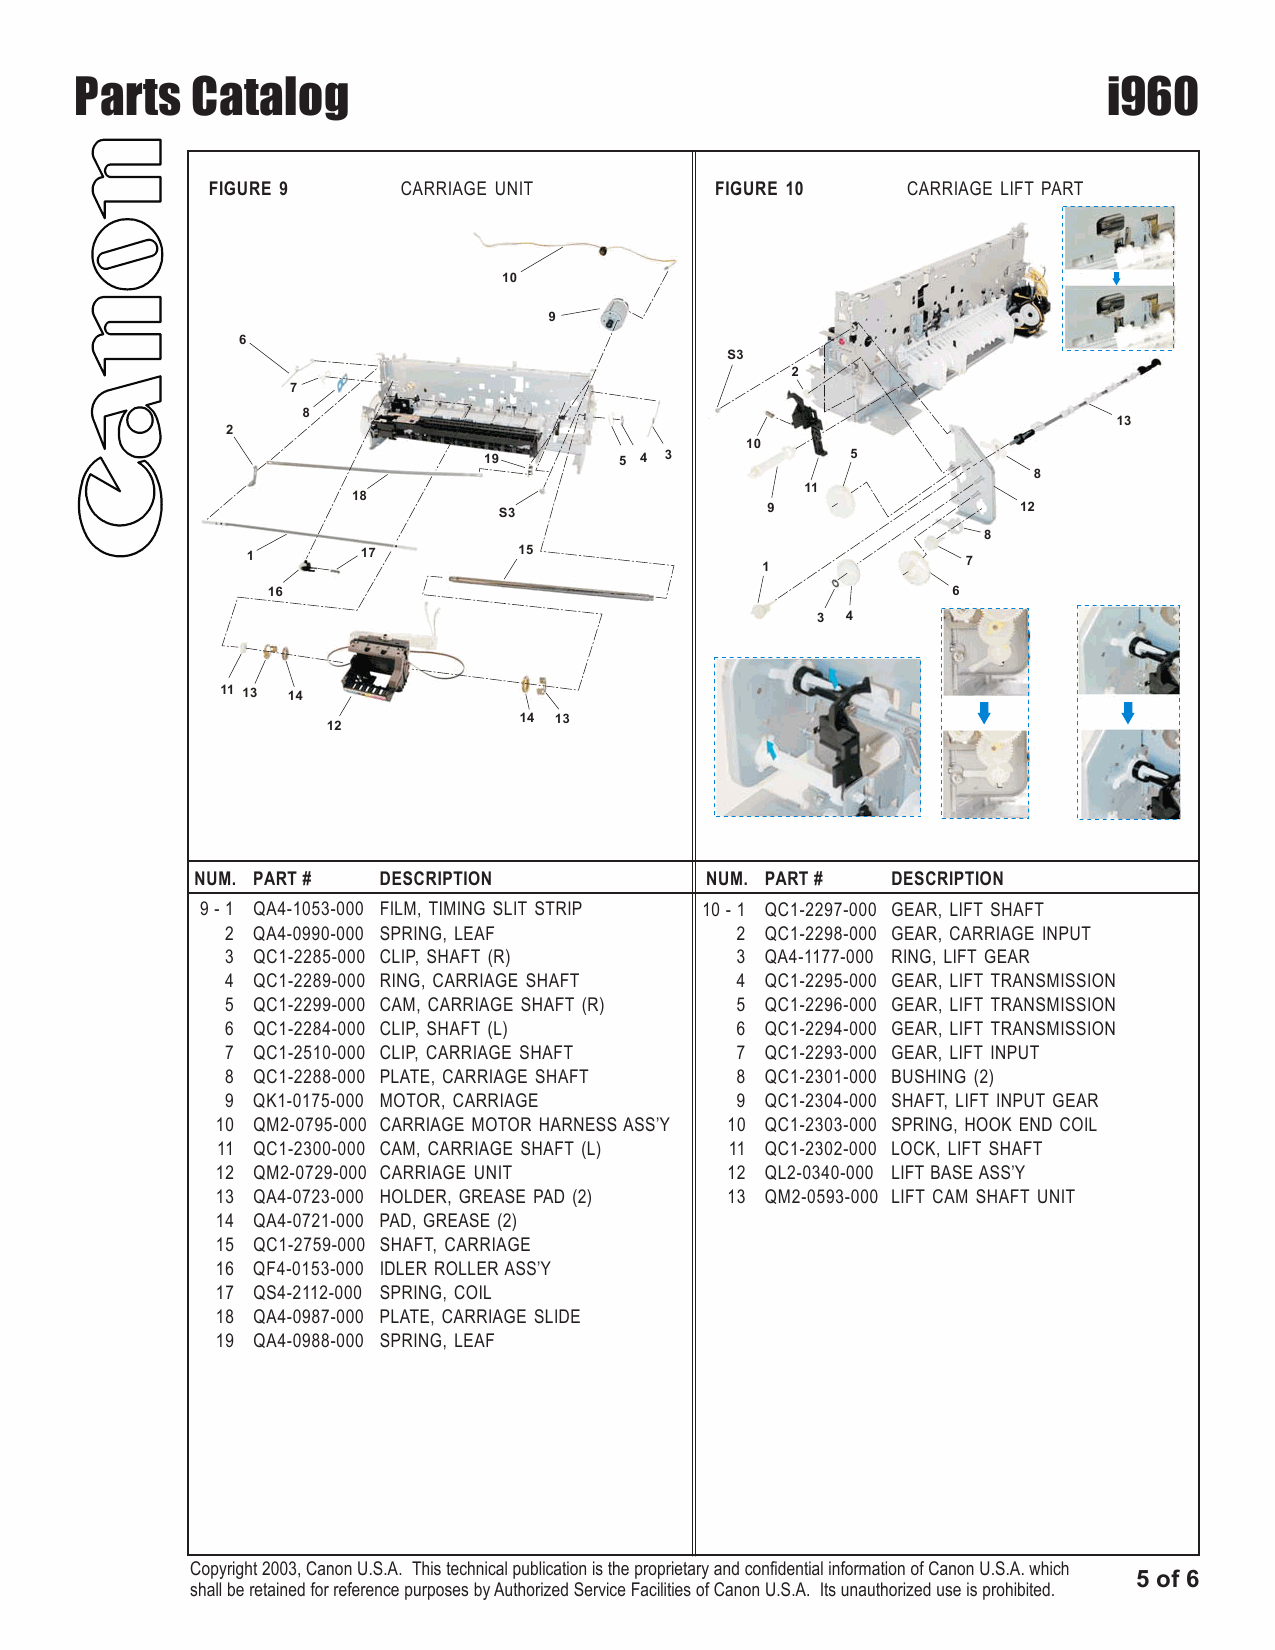 Canon PIXUS i960 Parts Catalog Manual-6